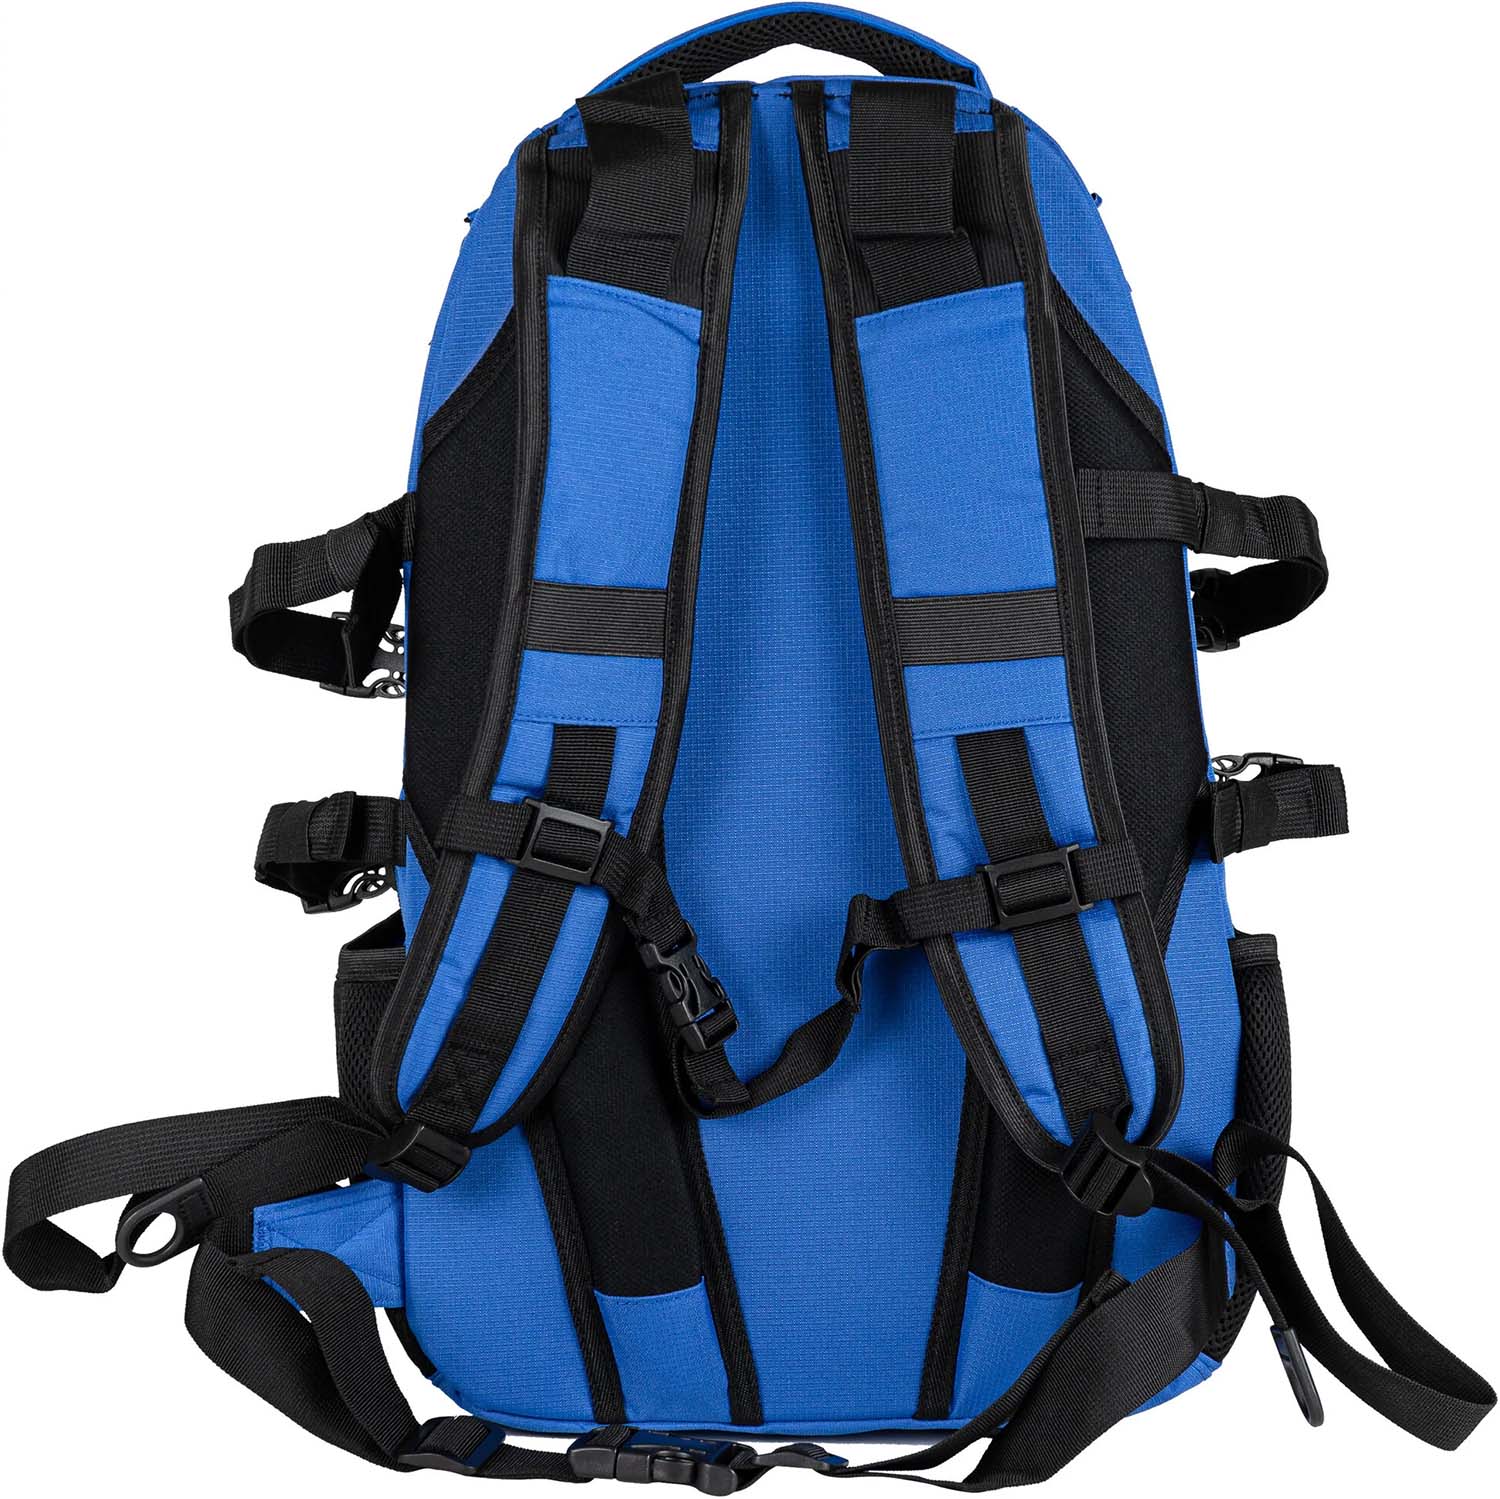 Рюкзак для роликов Powerslide WeLoveToSkate Backpack Blue